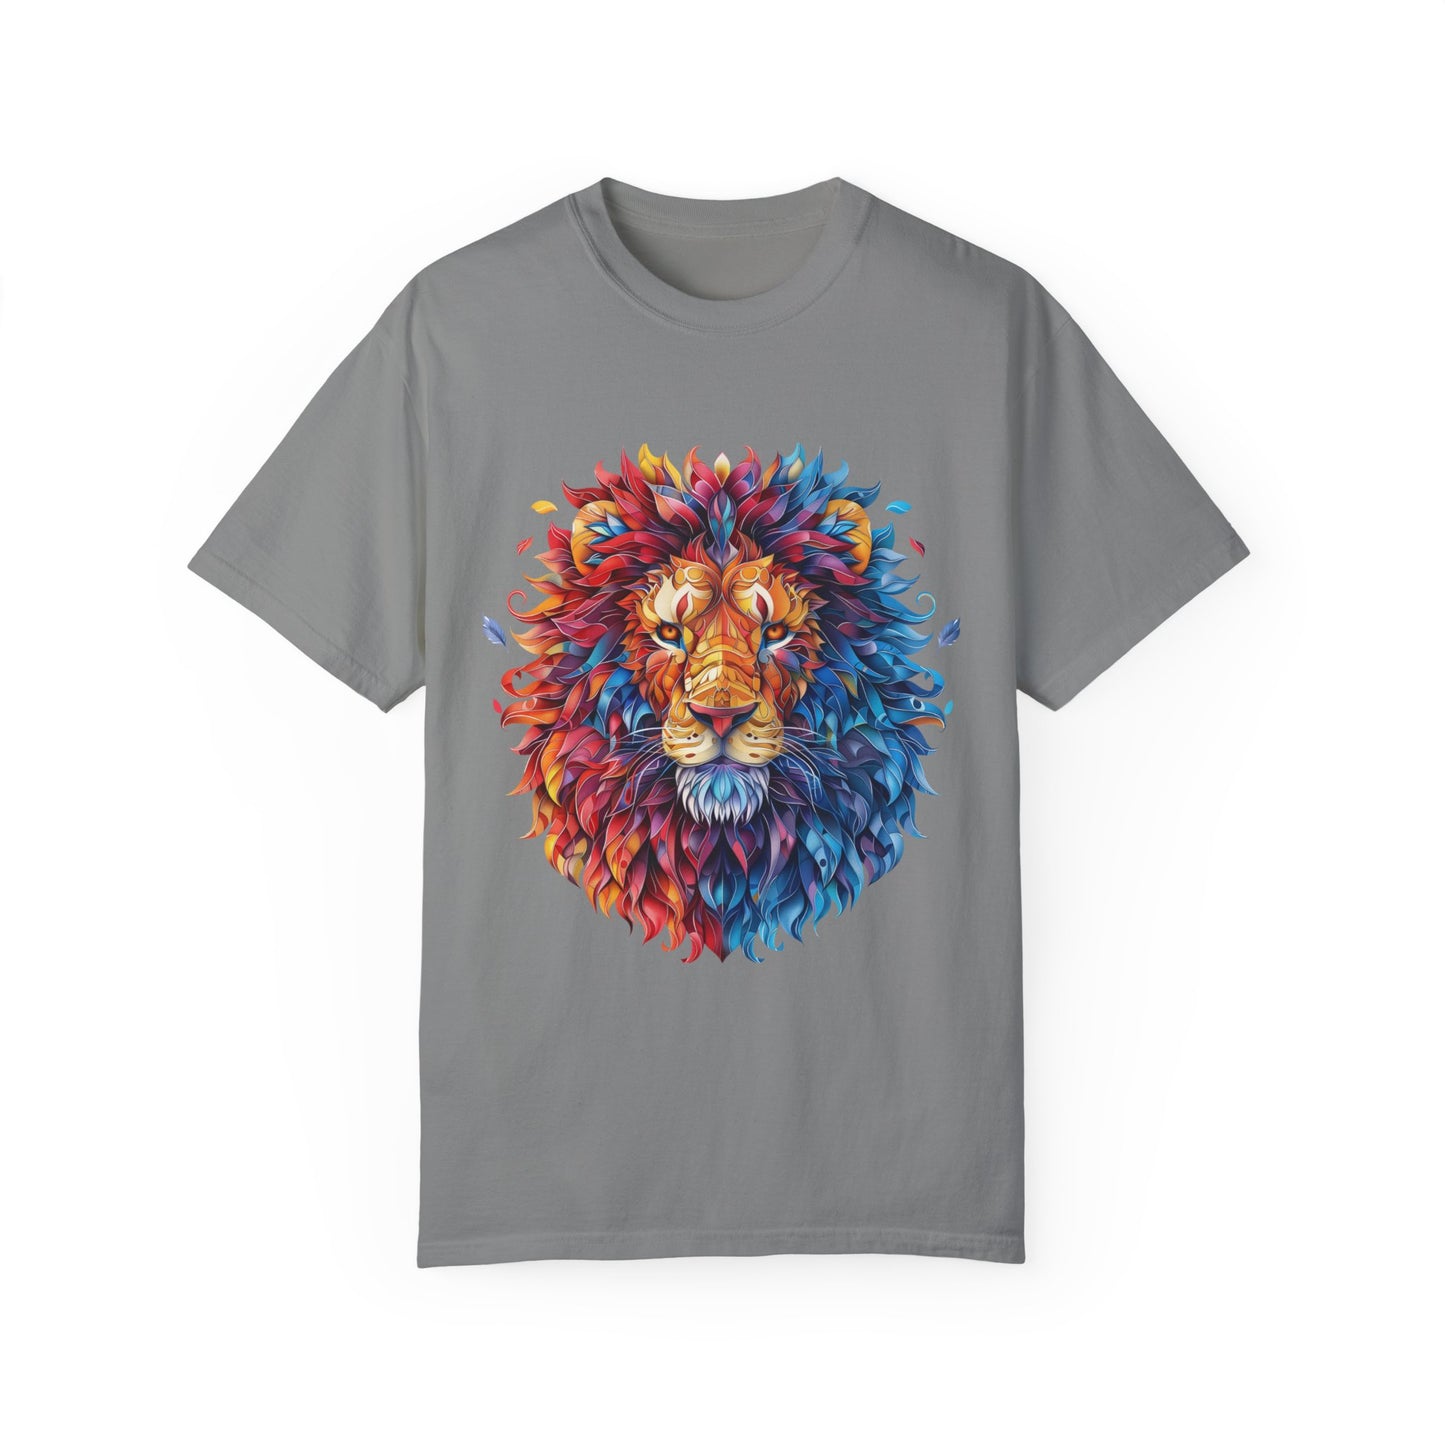 Lion Head Cool Graphic Design Novelty Unisex Garment-dyed T-shirt Cotton Funny Humorous Graphic Soft Premium Unisex Men Women Granite T-shirt Birthday Gift-4